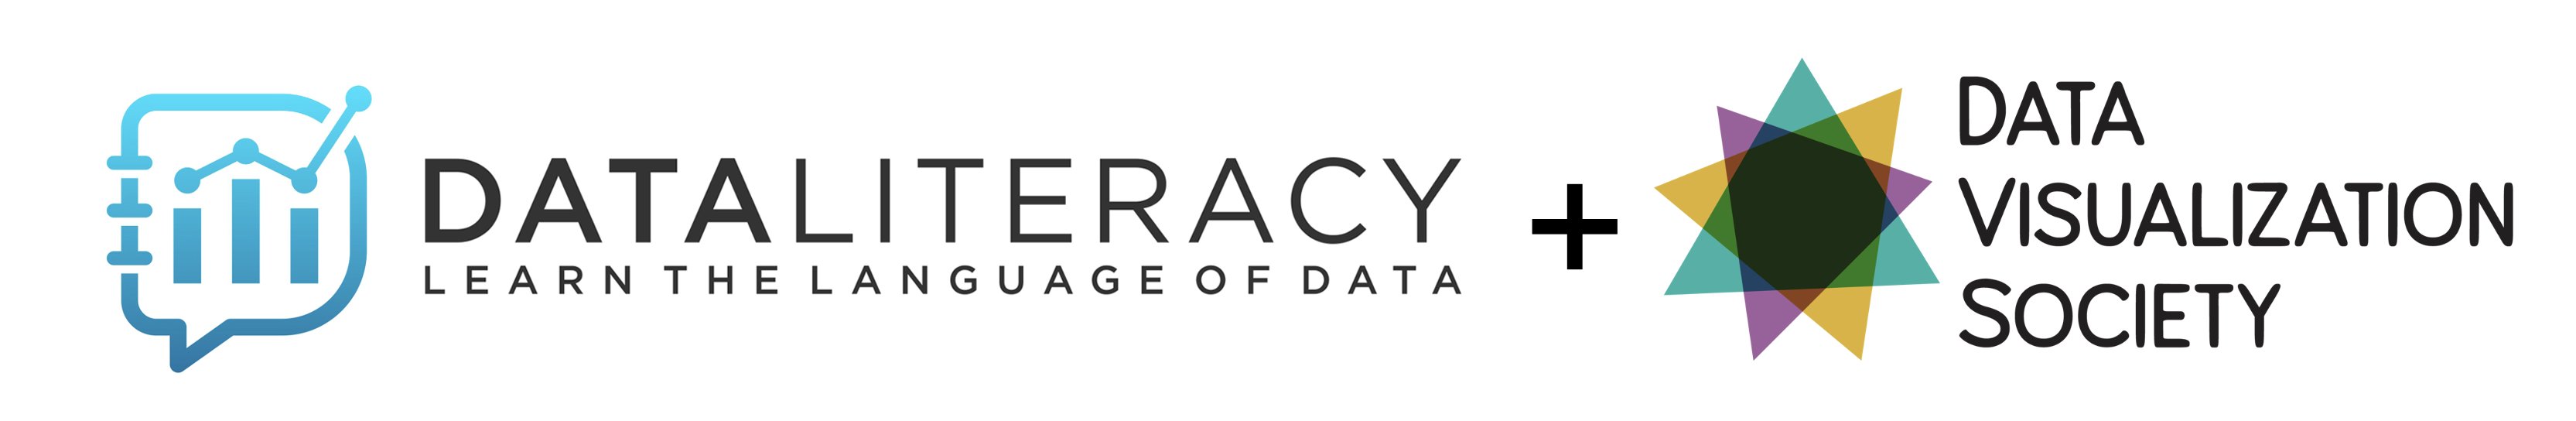 Partnering with the Data Visualization Society | Data Literacy | Data Literacy  